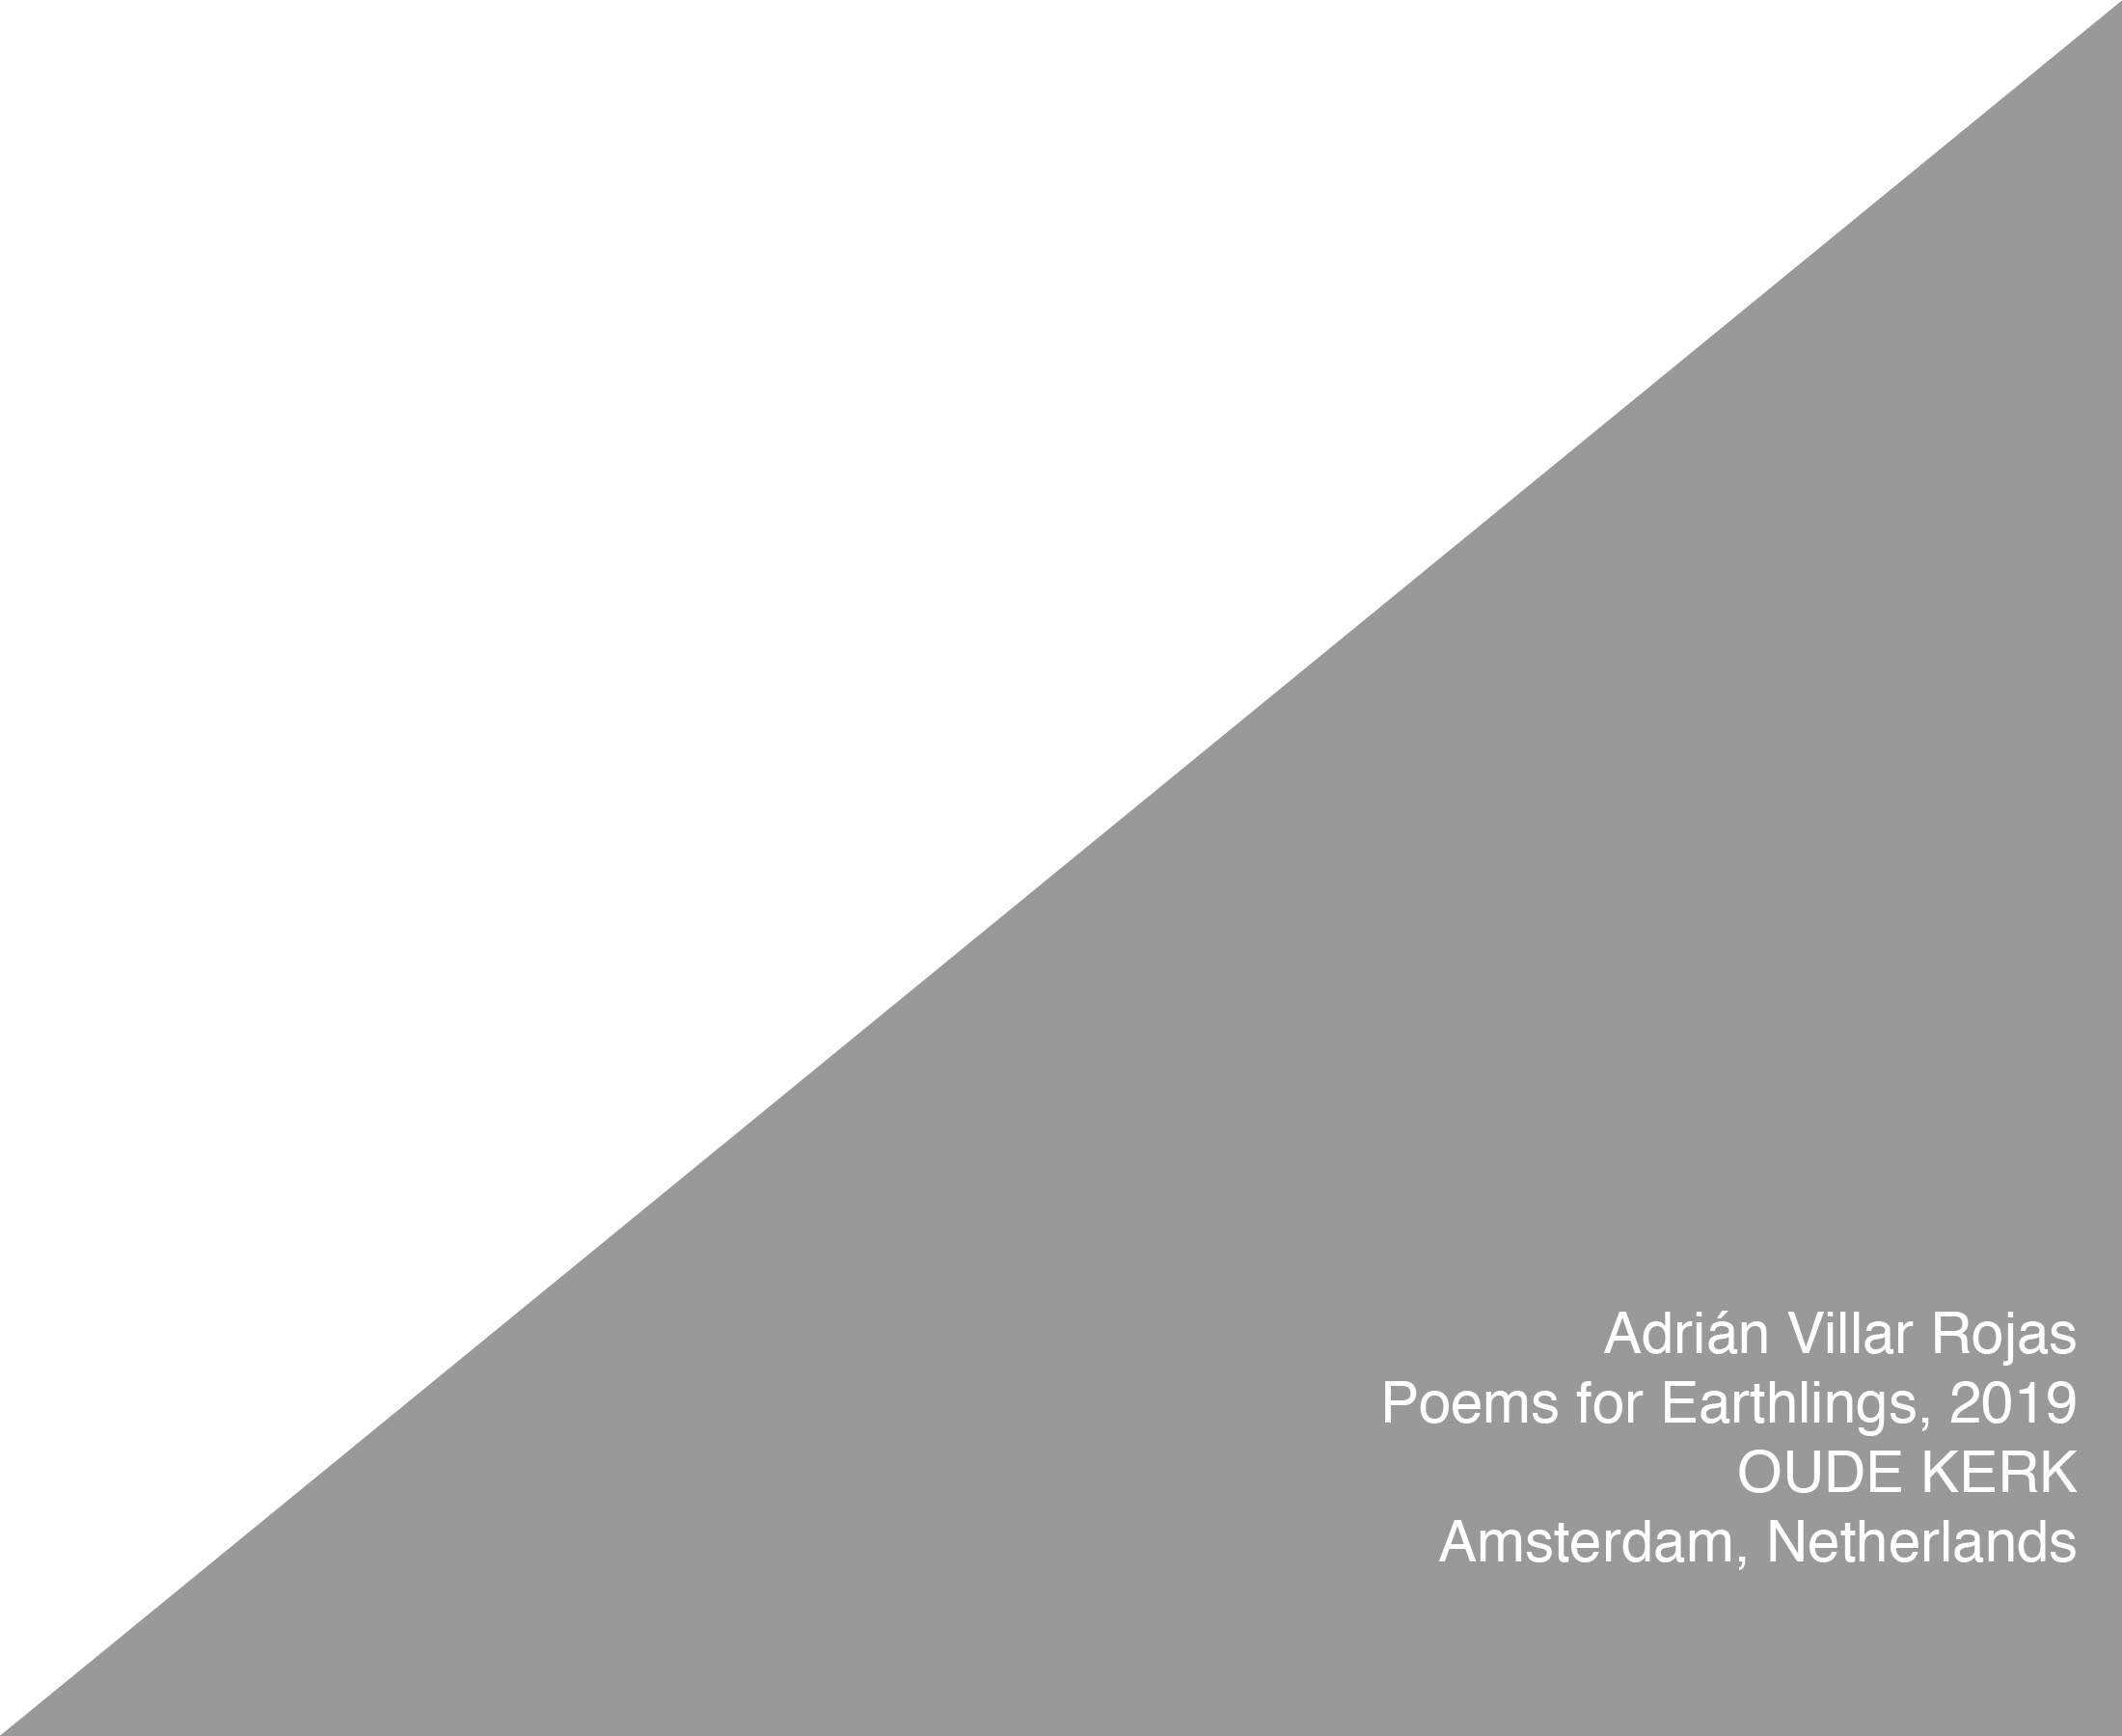 AVR PFE Amsterdam 2019 title